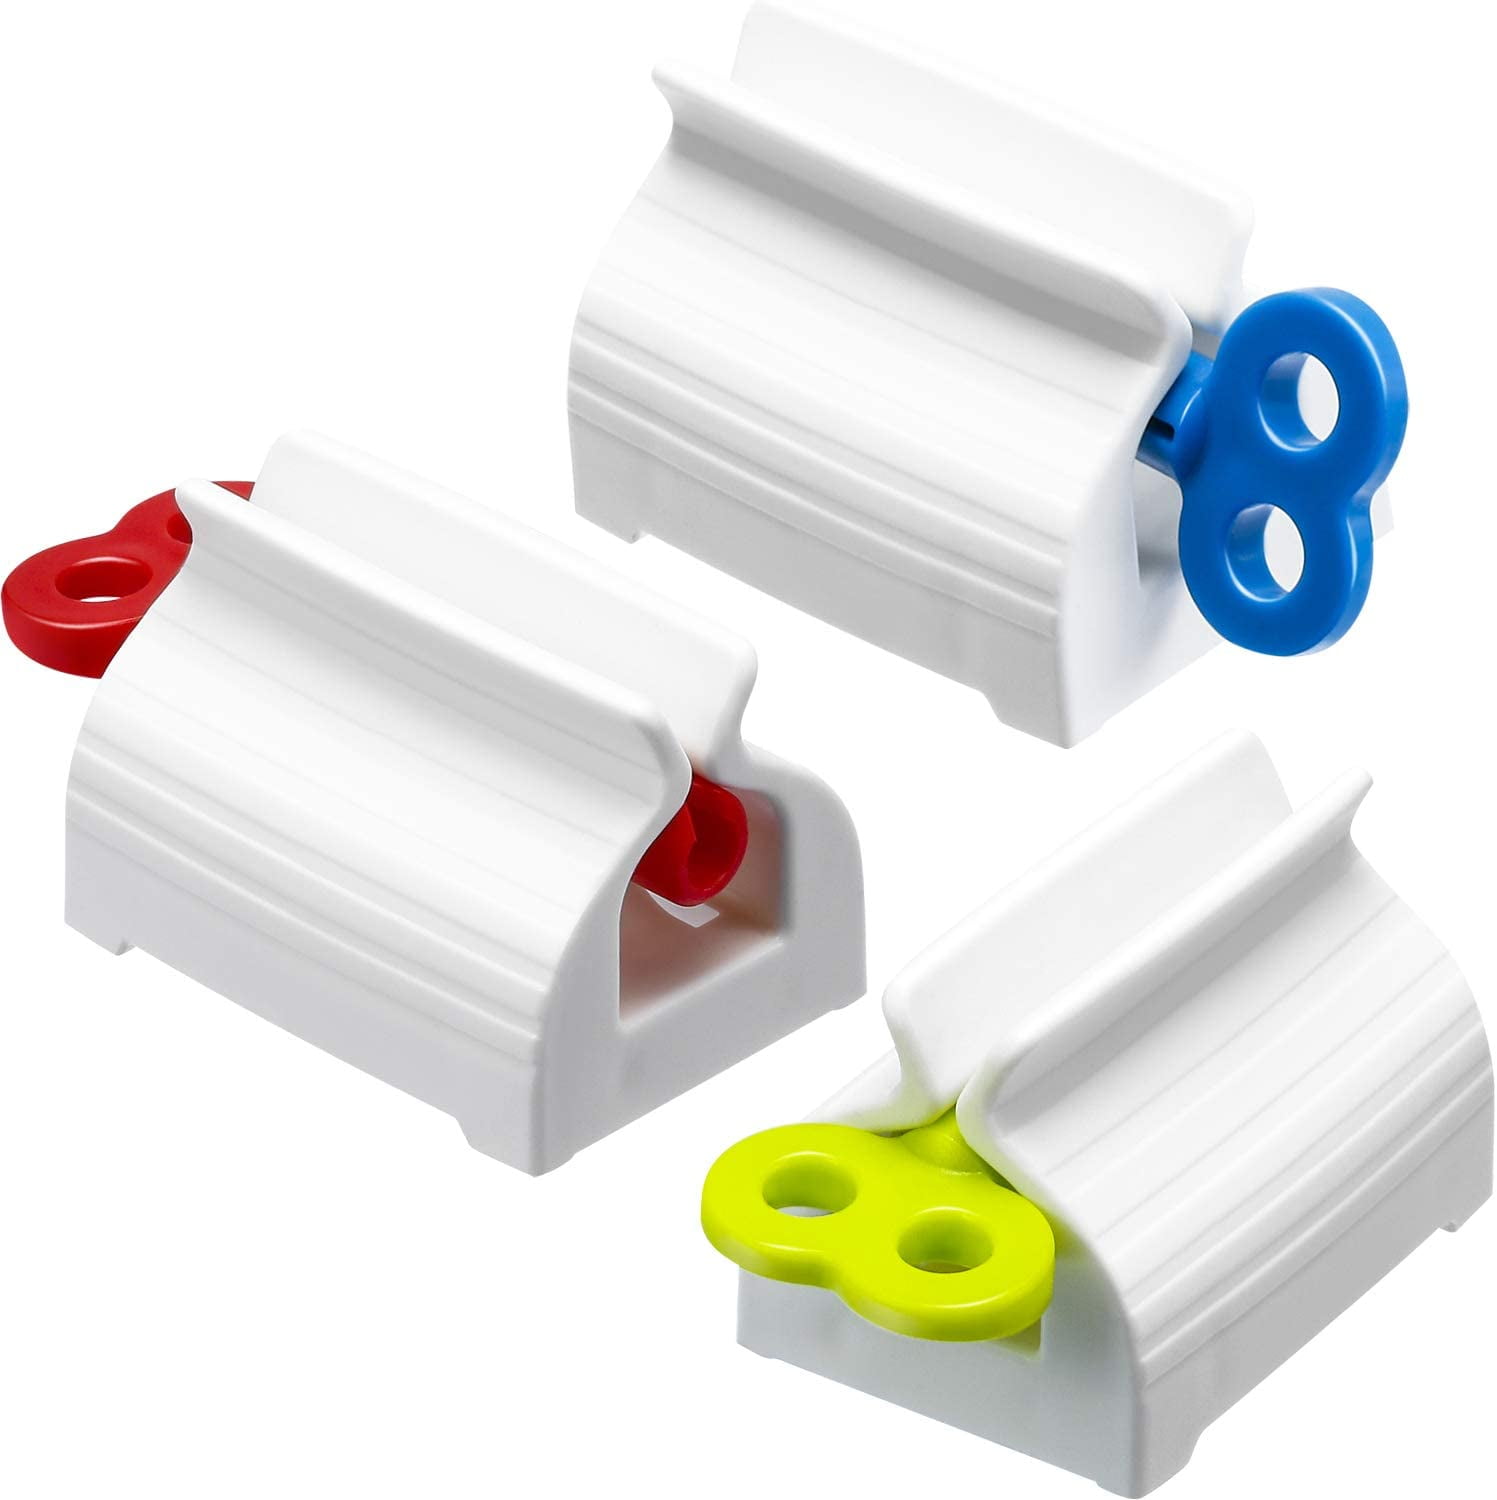 6 Plastic Ez Tube Squeezer Toothpaste Dispenser Holder Rolling Bathroom Extract 